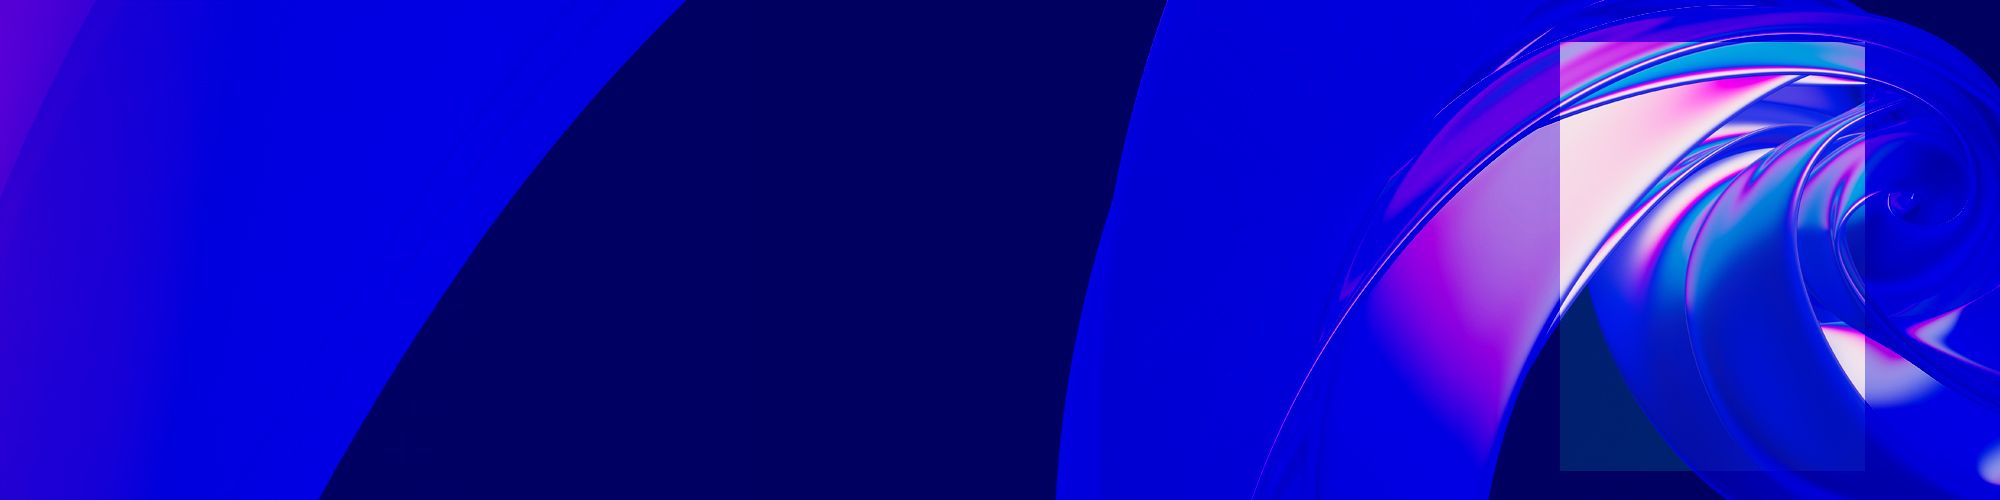 Dark blue abstract 